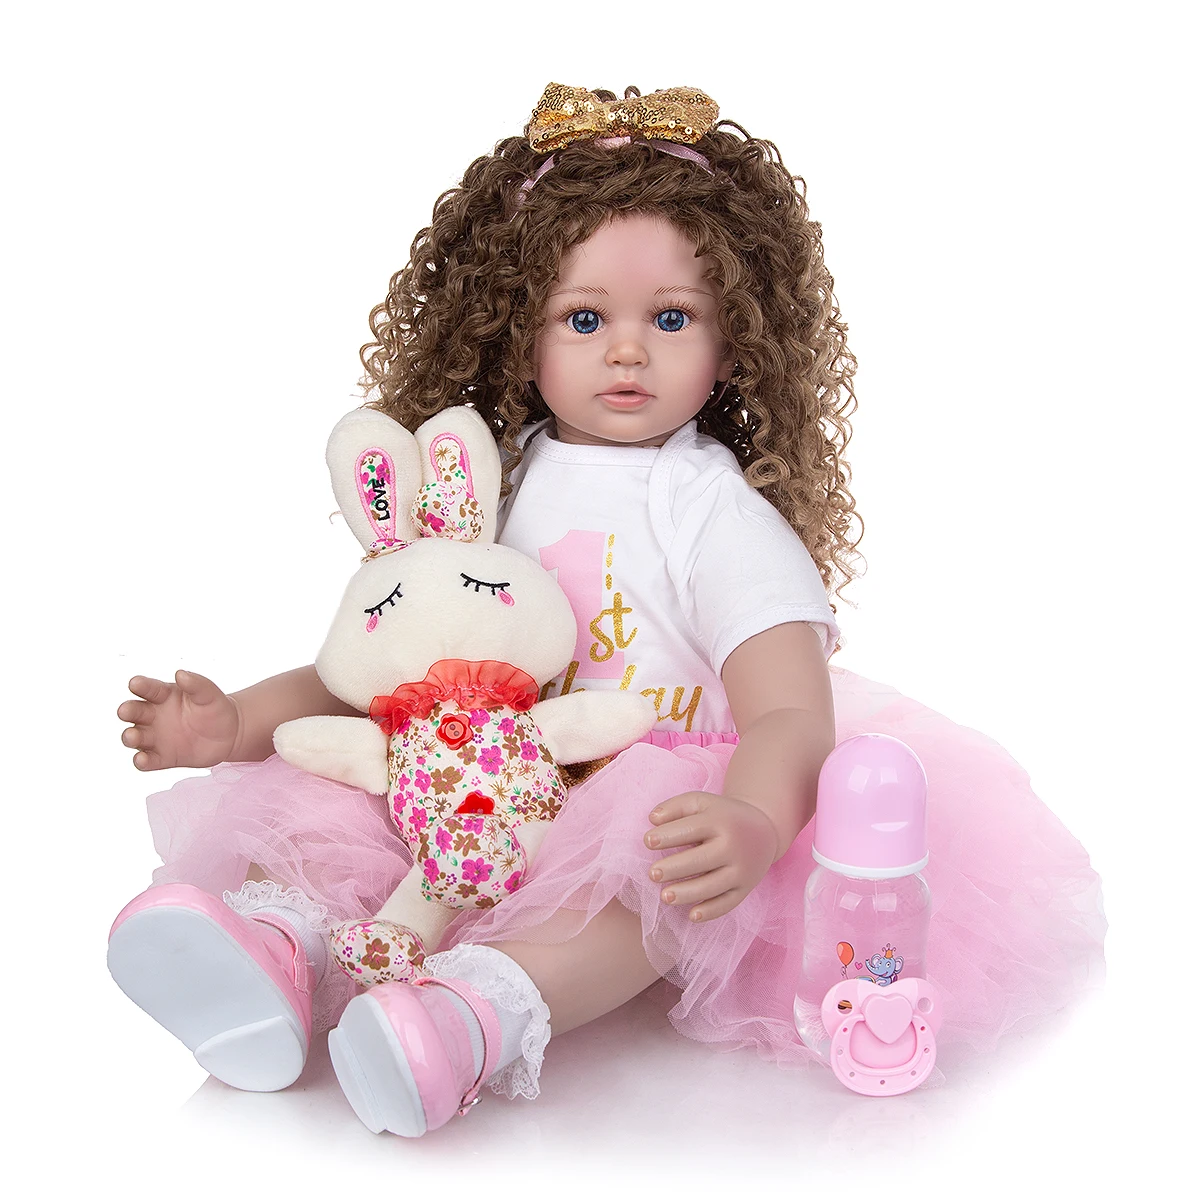 

24" Alive Silicone Reborn Toddler Baby Doll Toys 60cm Princess Girl bebe reborn real Girls Brinquedos Collection Birthday Gift